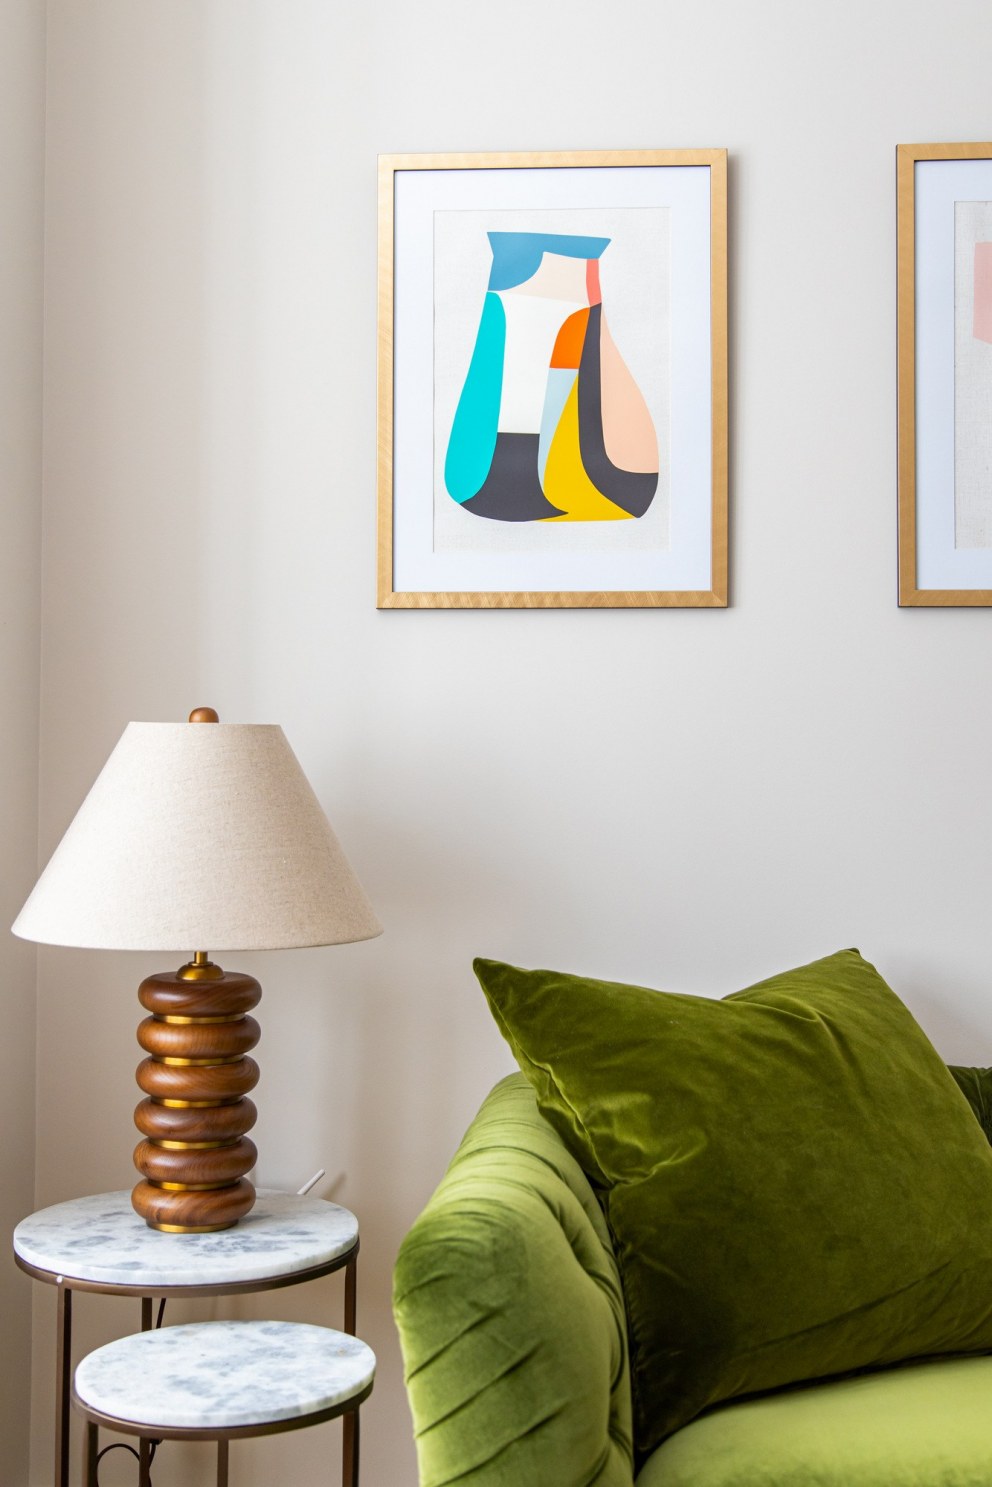 Canonbury House | living room | Interior Designers